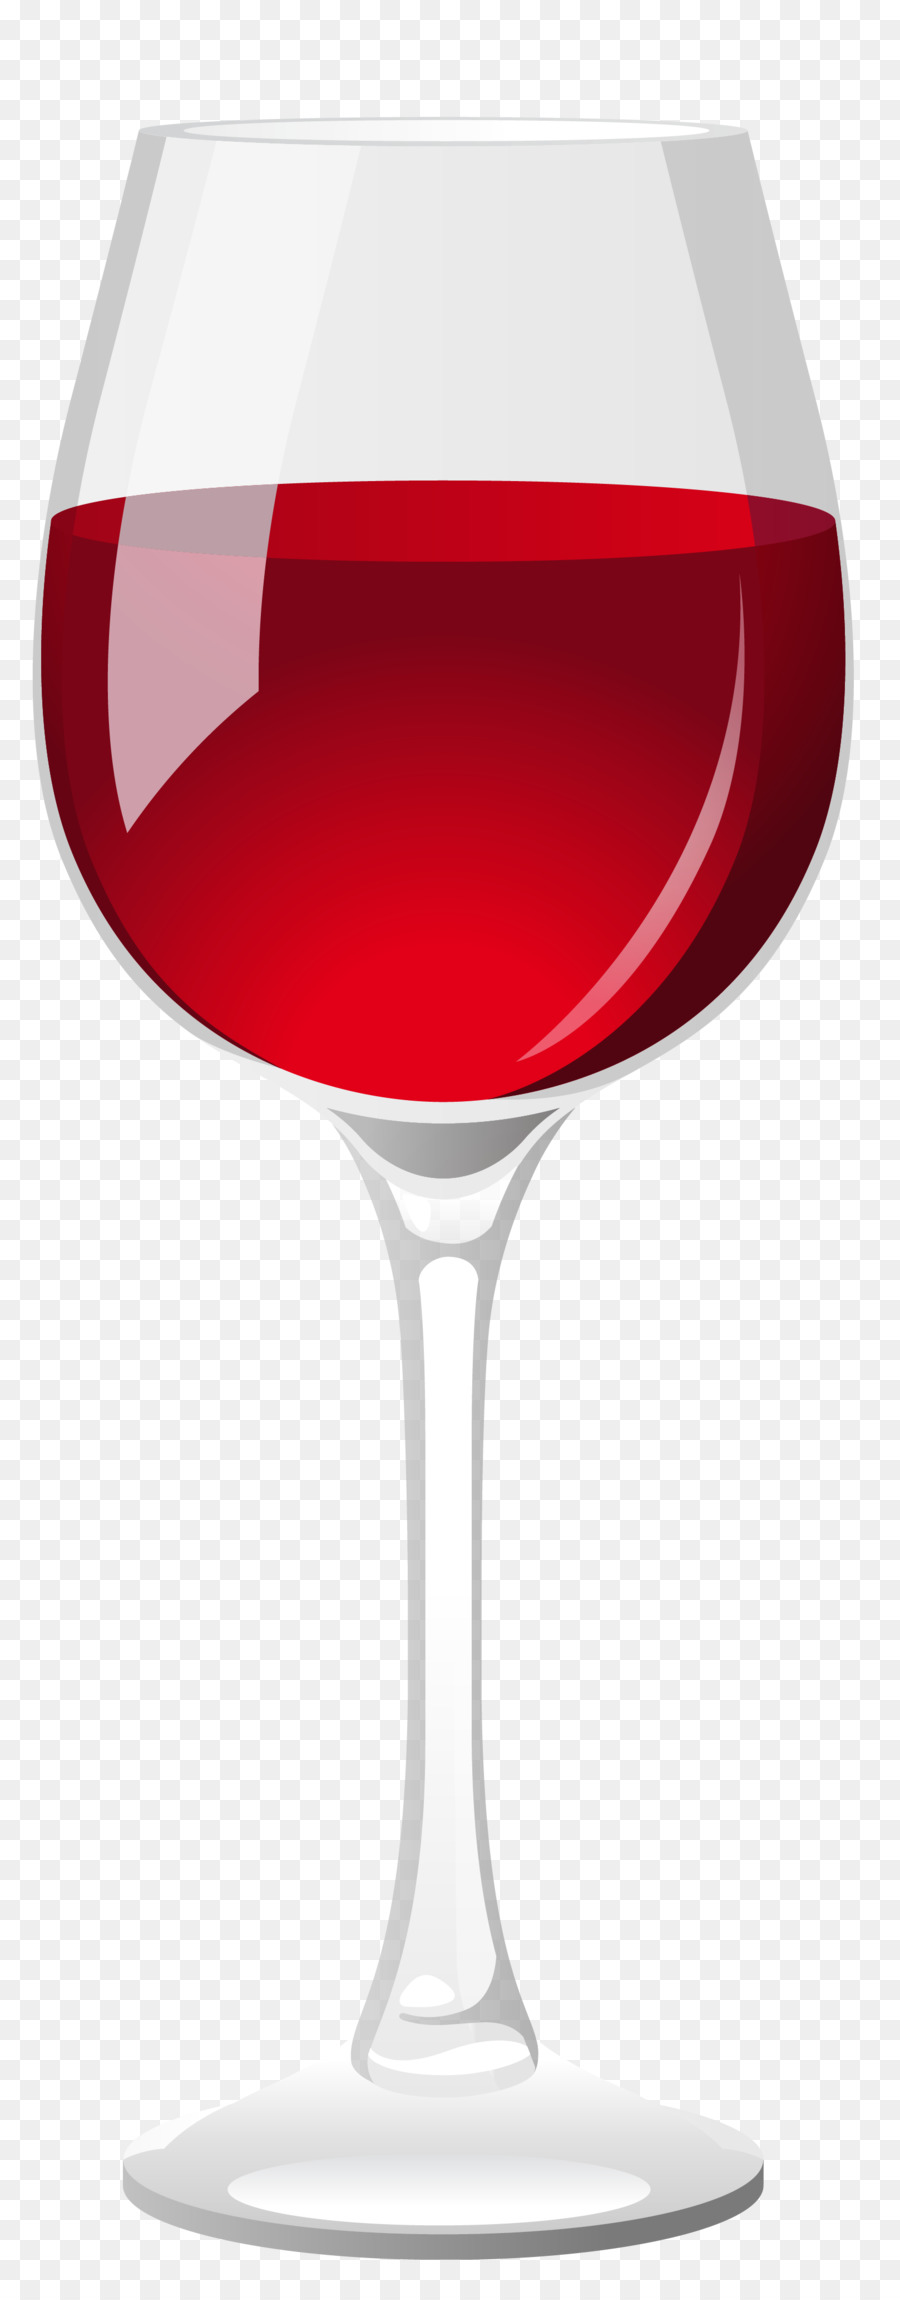 Verdragen Wonen ondergeschikt Free Wine Glass Transparent Background Clipart, Download Free Wine Glass  Transparent Background Clipart png images, Free ClipArts on Clipart Library